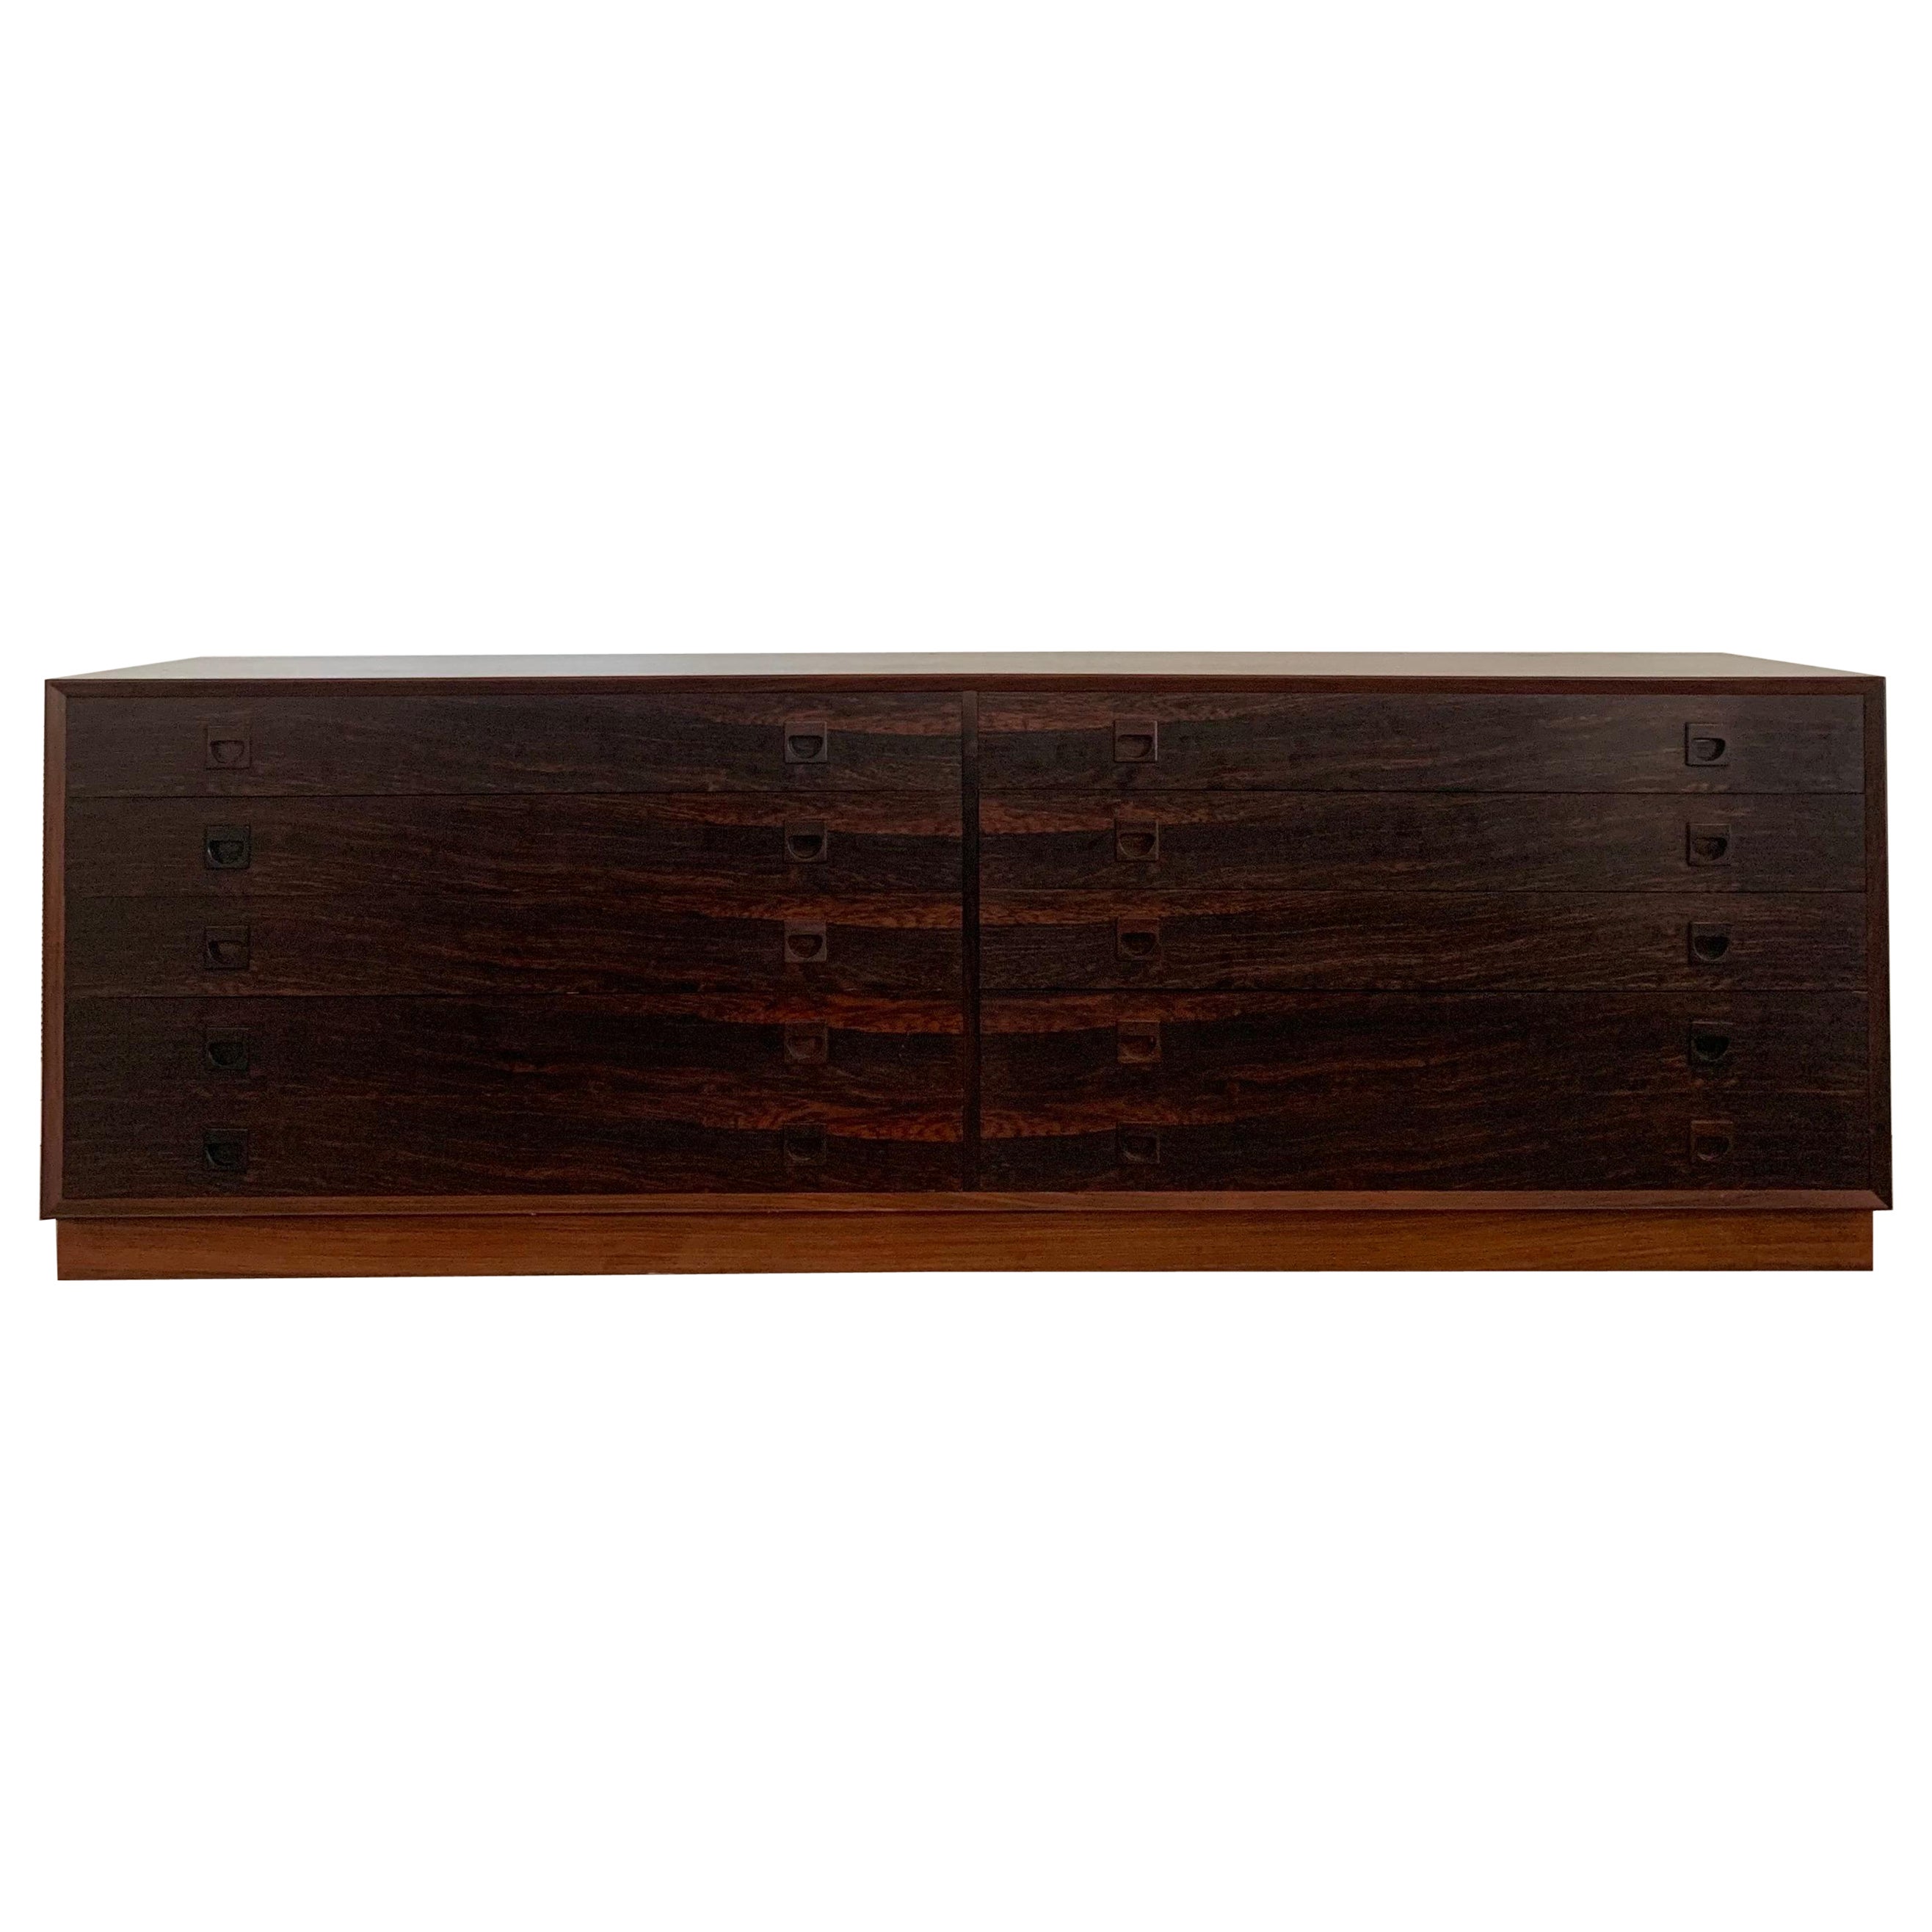 8 Drawer Danish Rosewood Dresser, Attr. Arne Wahl Iversen, Circa 1960s For Sale